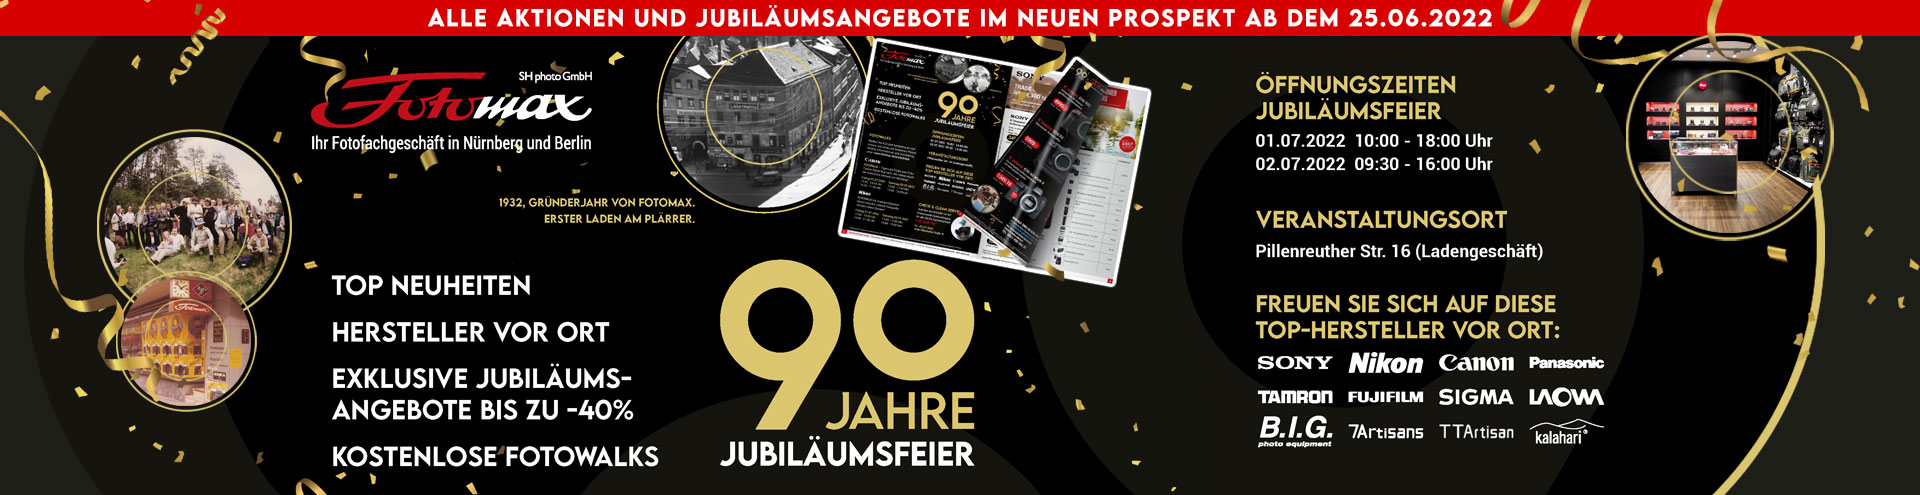 90 Jahre Fotomax - Jubiläumfeier in Juli 2022 in Nürnberg